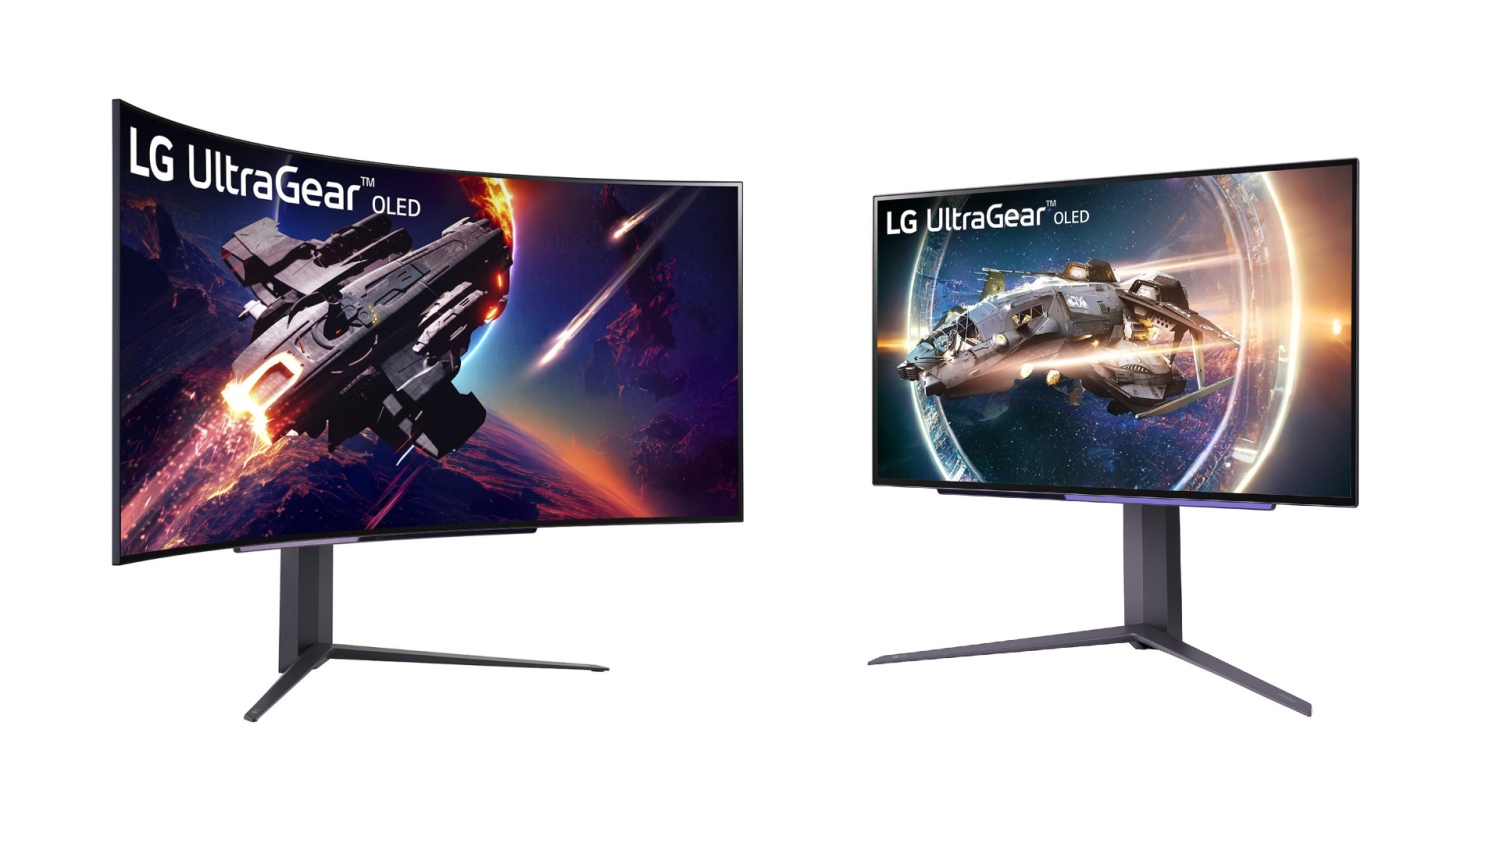 TweakTown Enlarged Image - LG's new UltraGear OLED gaming monitors.